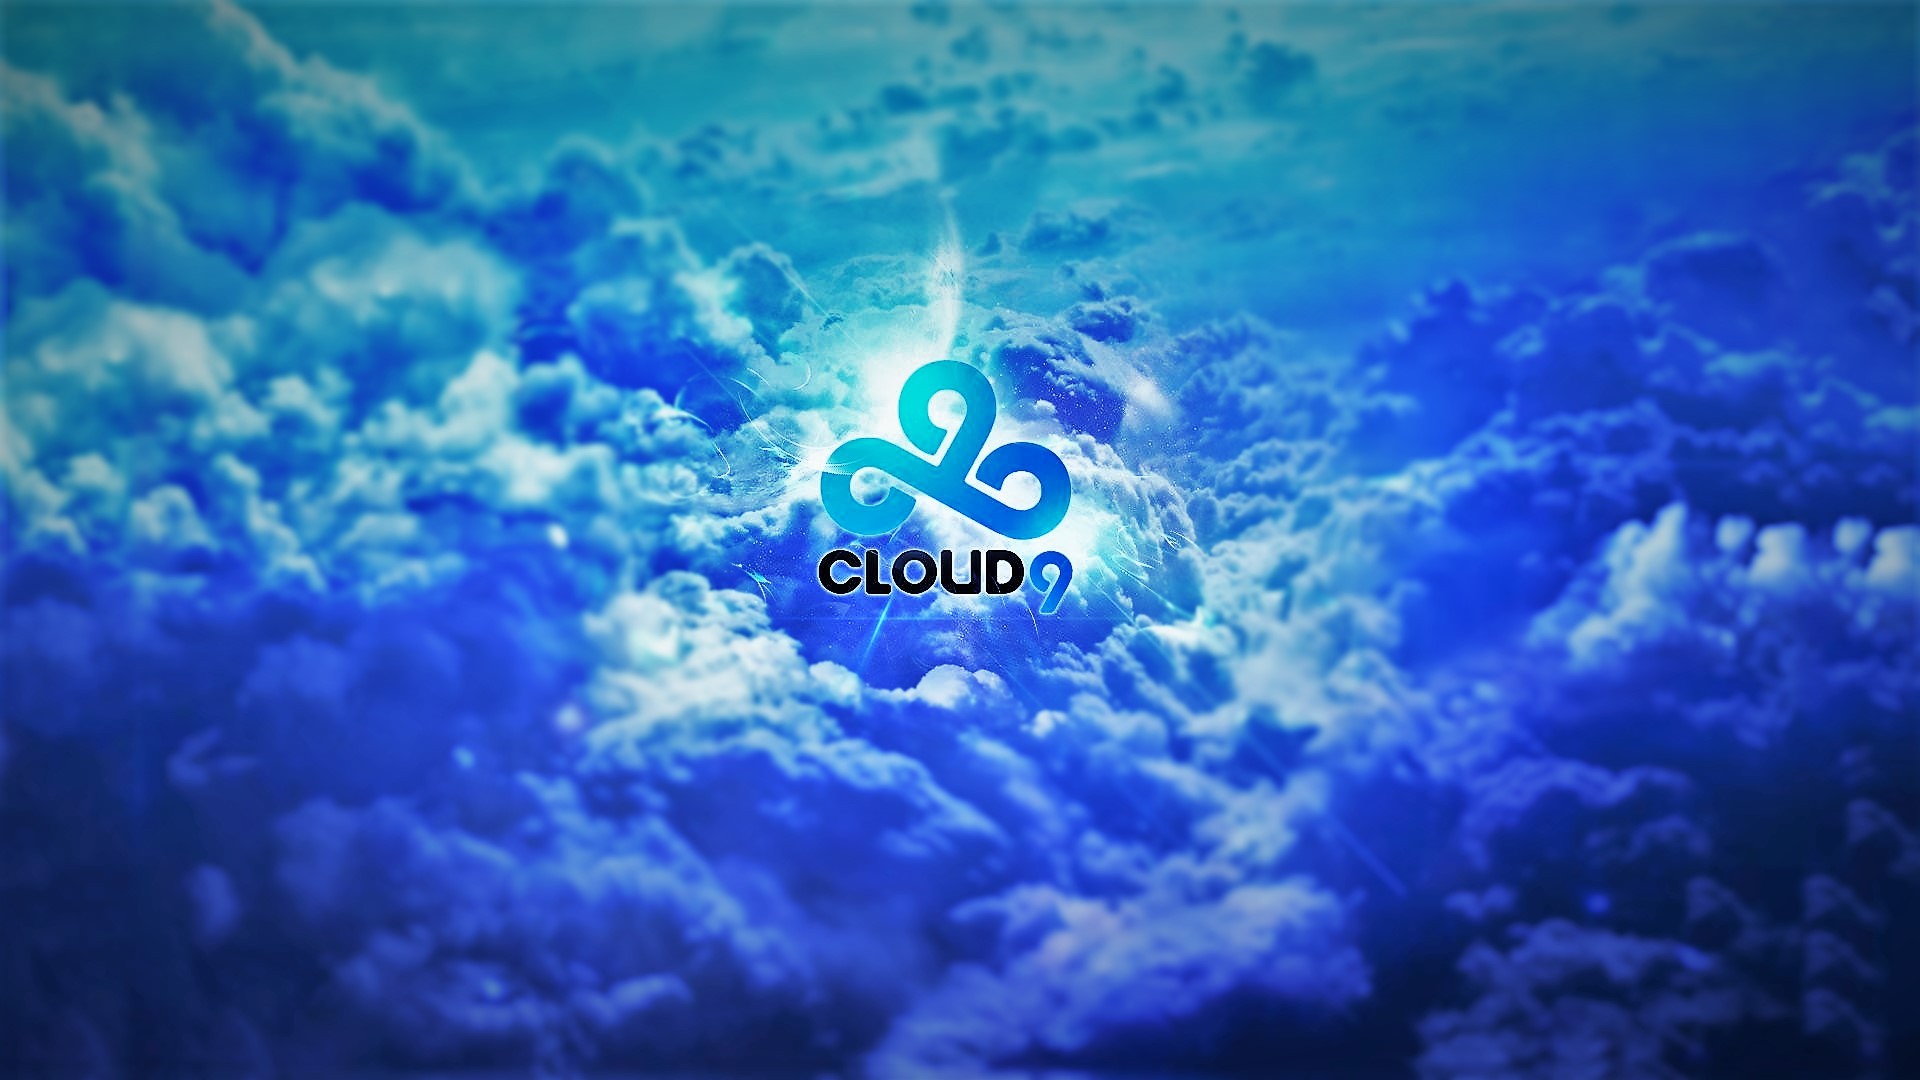 c9, Cloud9, Blue, Sky, Clouds Wallpaper